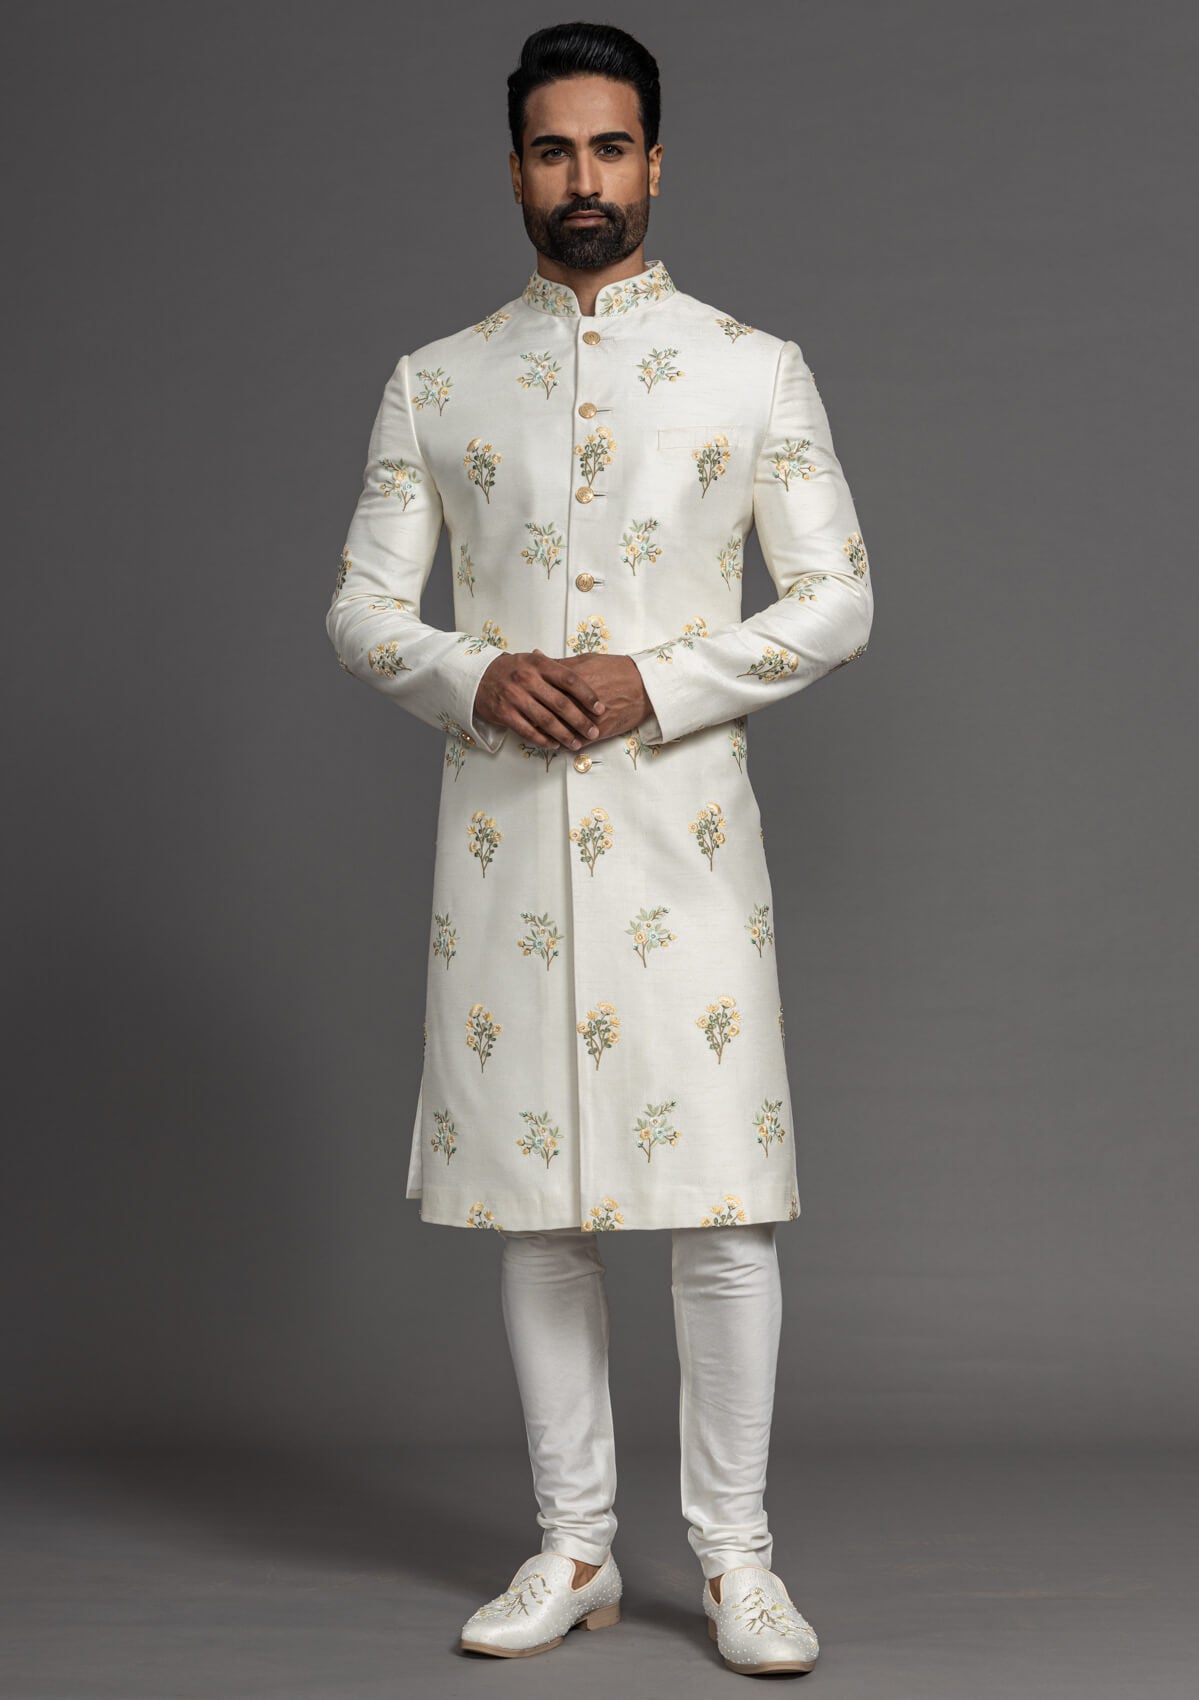 Fashionable Sherwani combining tradition and style